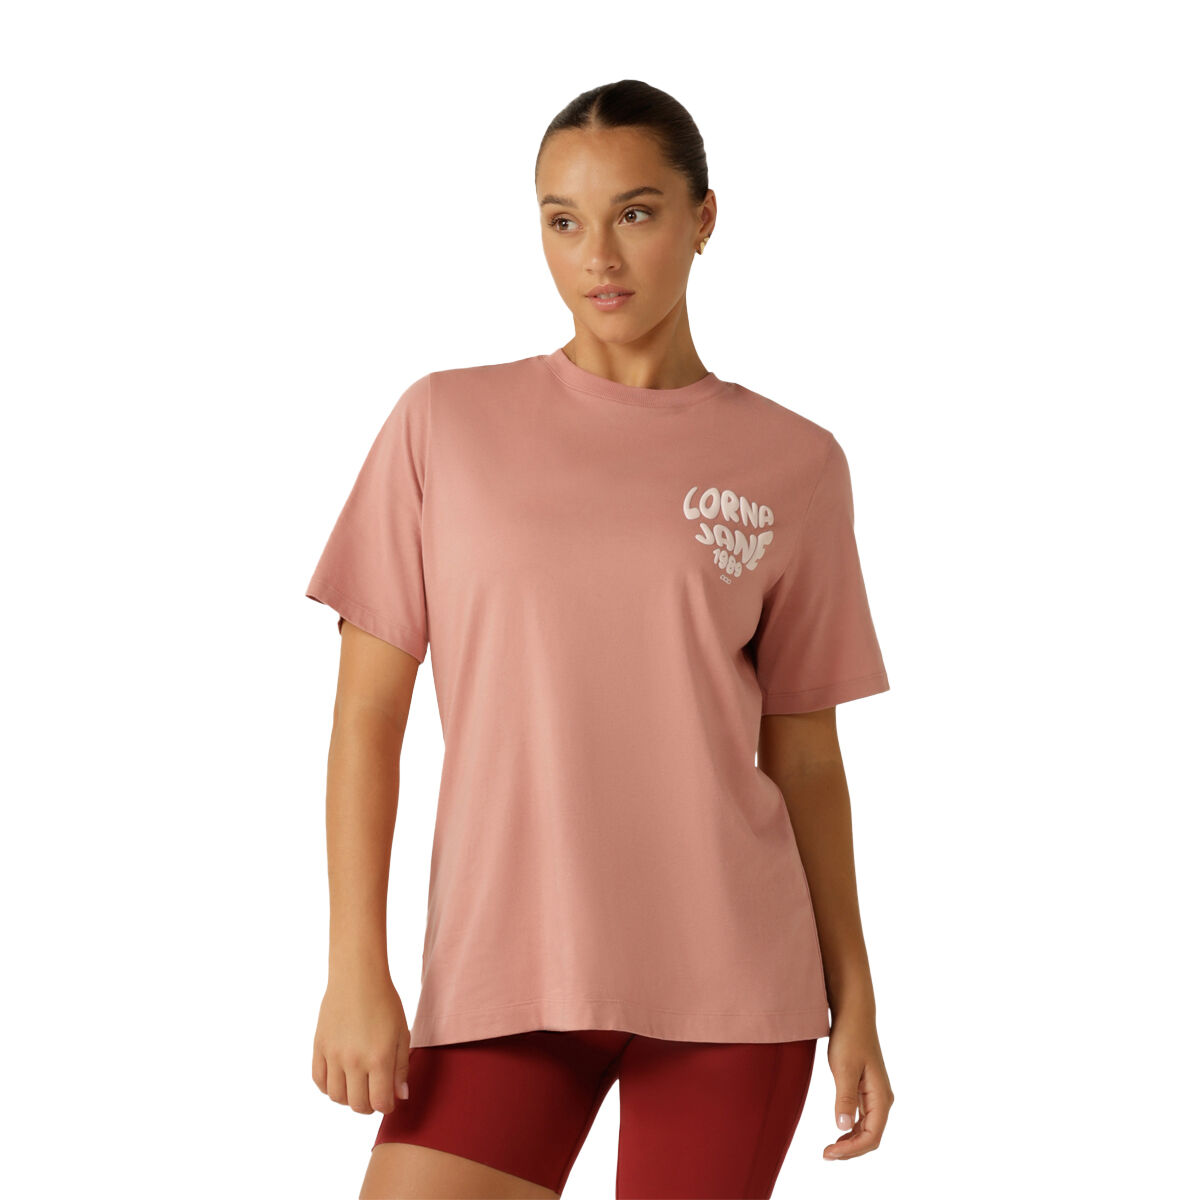 Lorna Jane T-Shirts, Women's Tees & Tops